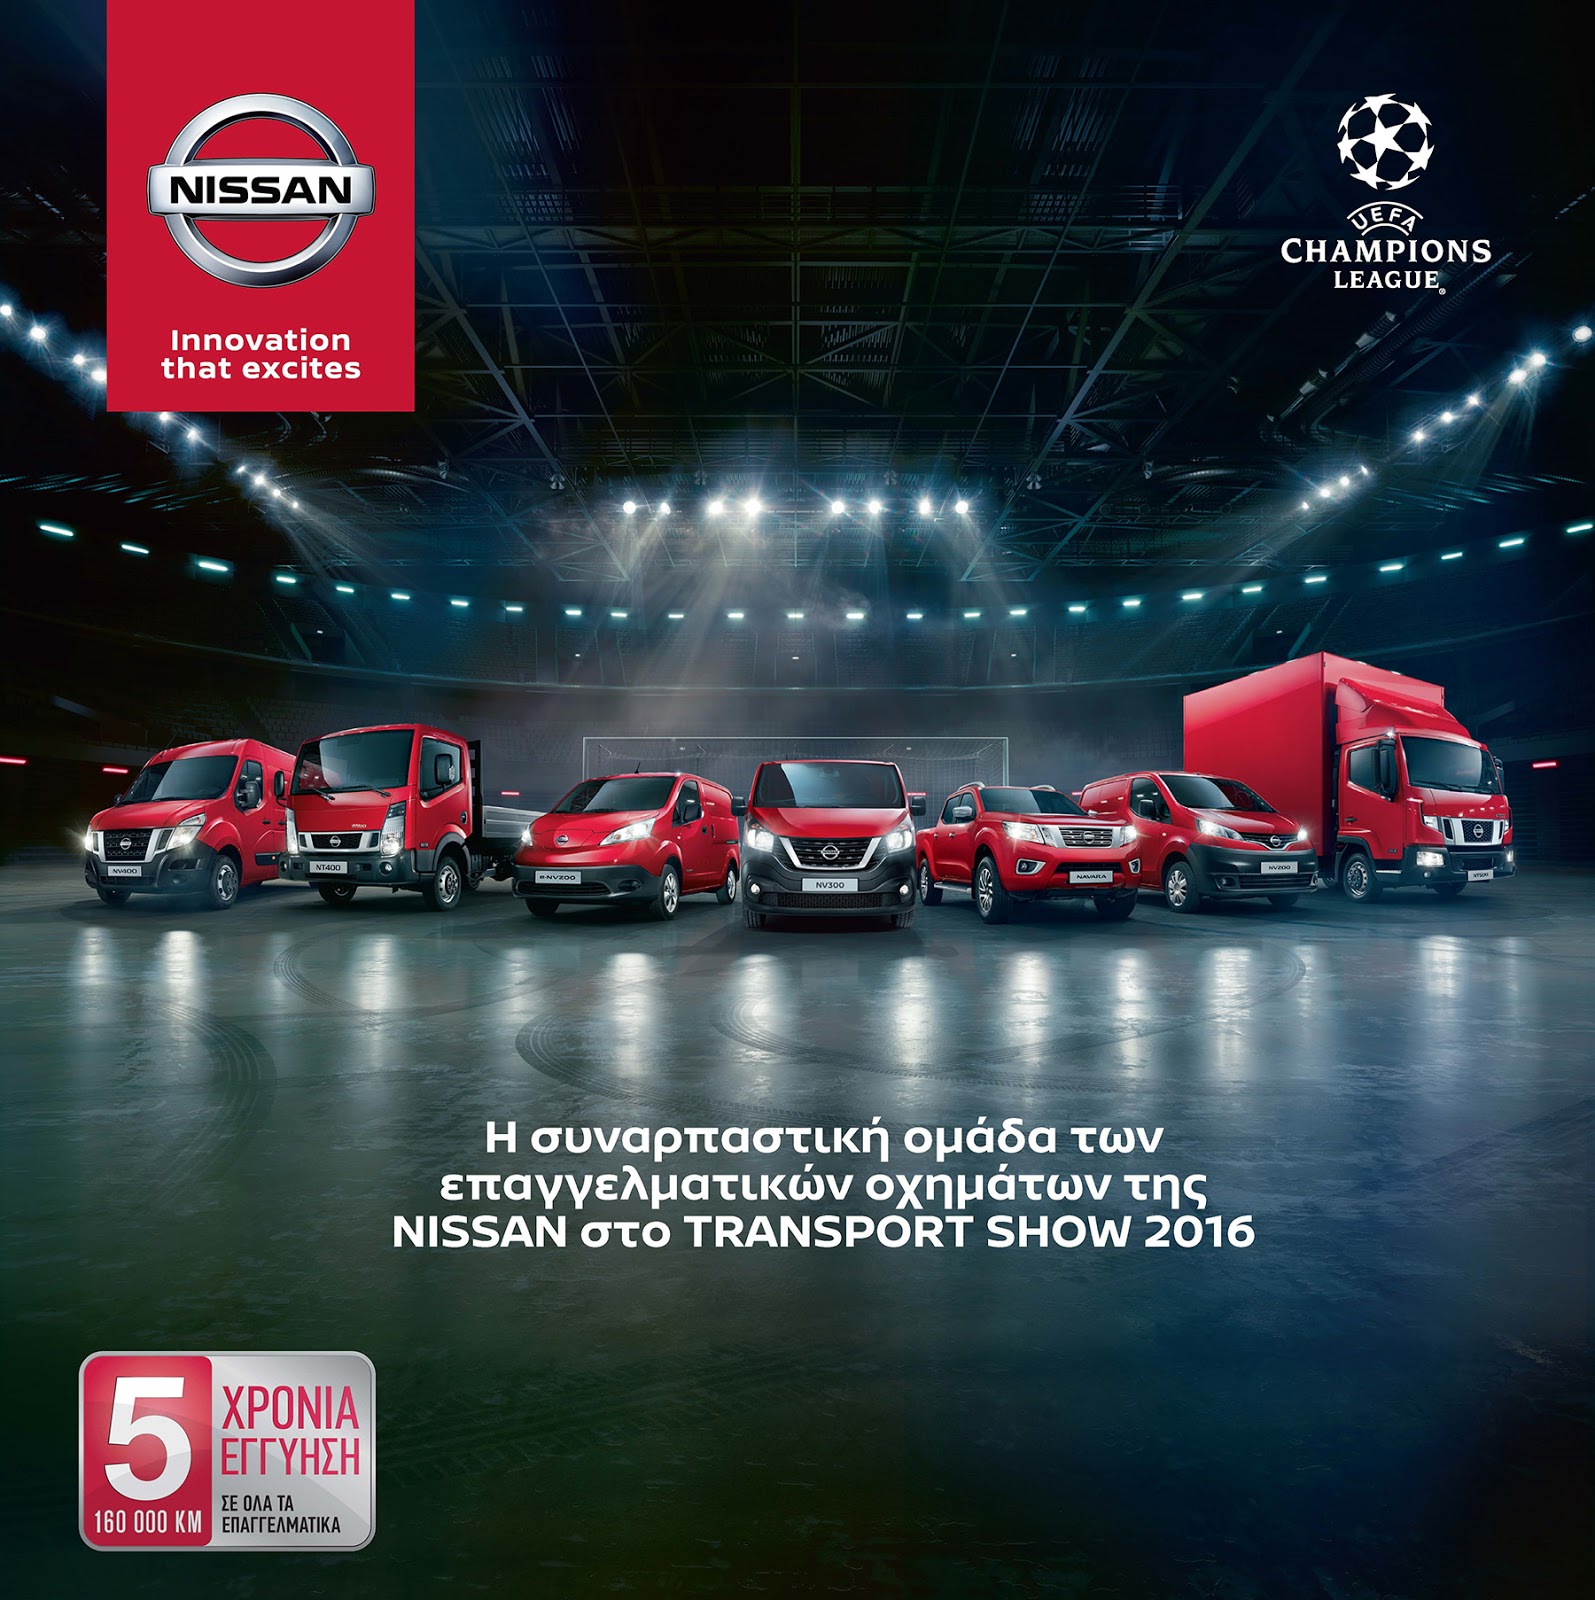 Nissan LCV Transport Show 2016 rs Έκθεση Επαγγελματικών Οχημάτων στις 13 Οκτωβρίου και η Nissan θα είναι εκεί πλήρης